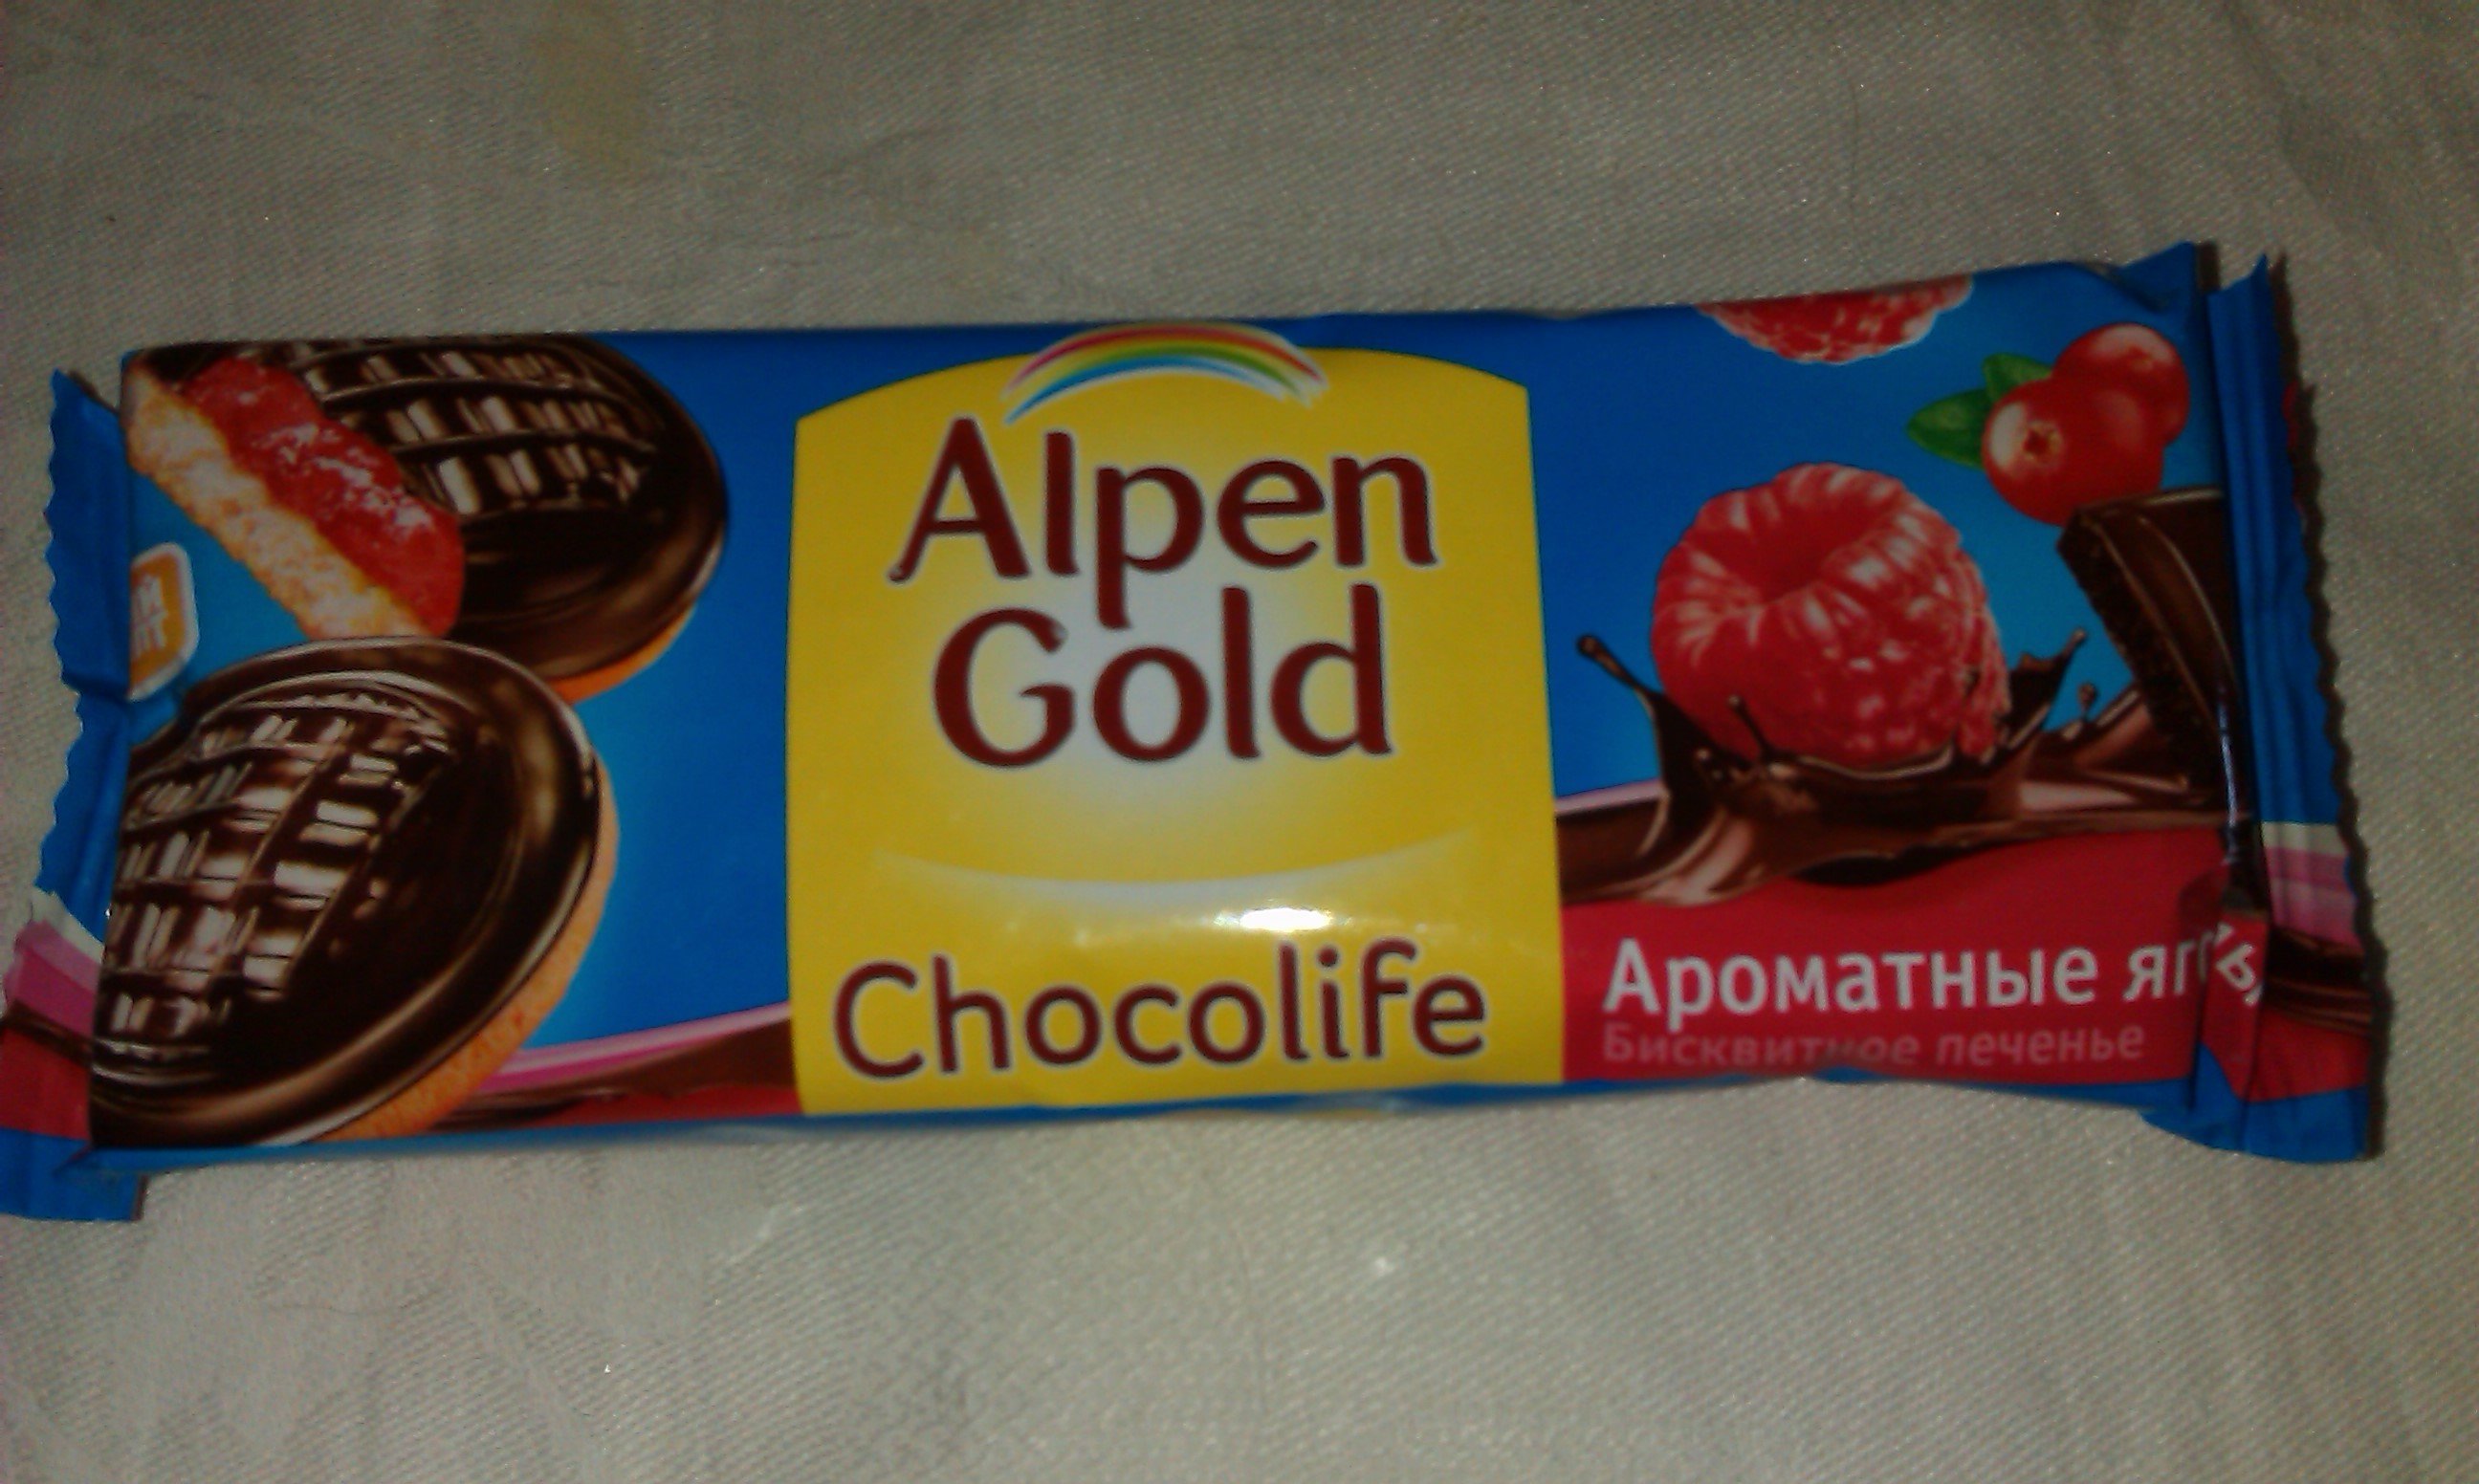 Choco life. Печенье Альпен Гольд бисквитное. Альпен Гольд Шоколайф бисквитное печенье. Печенье Альпен Гольд Chocolife. Alpen Gold Chocolife бисквитное печенье.